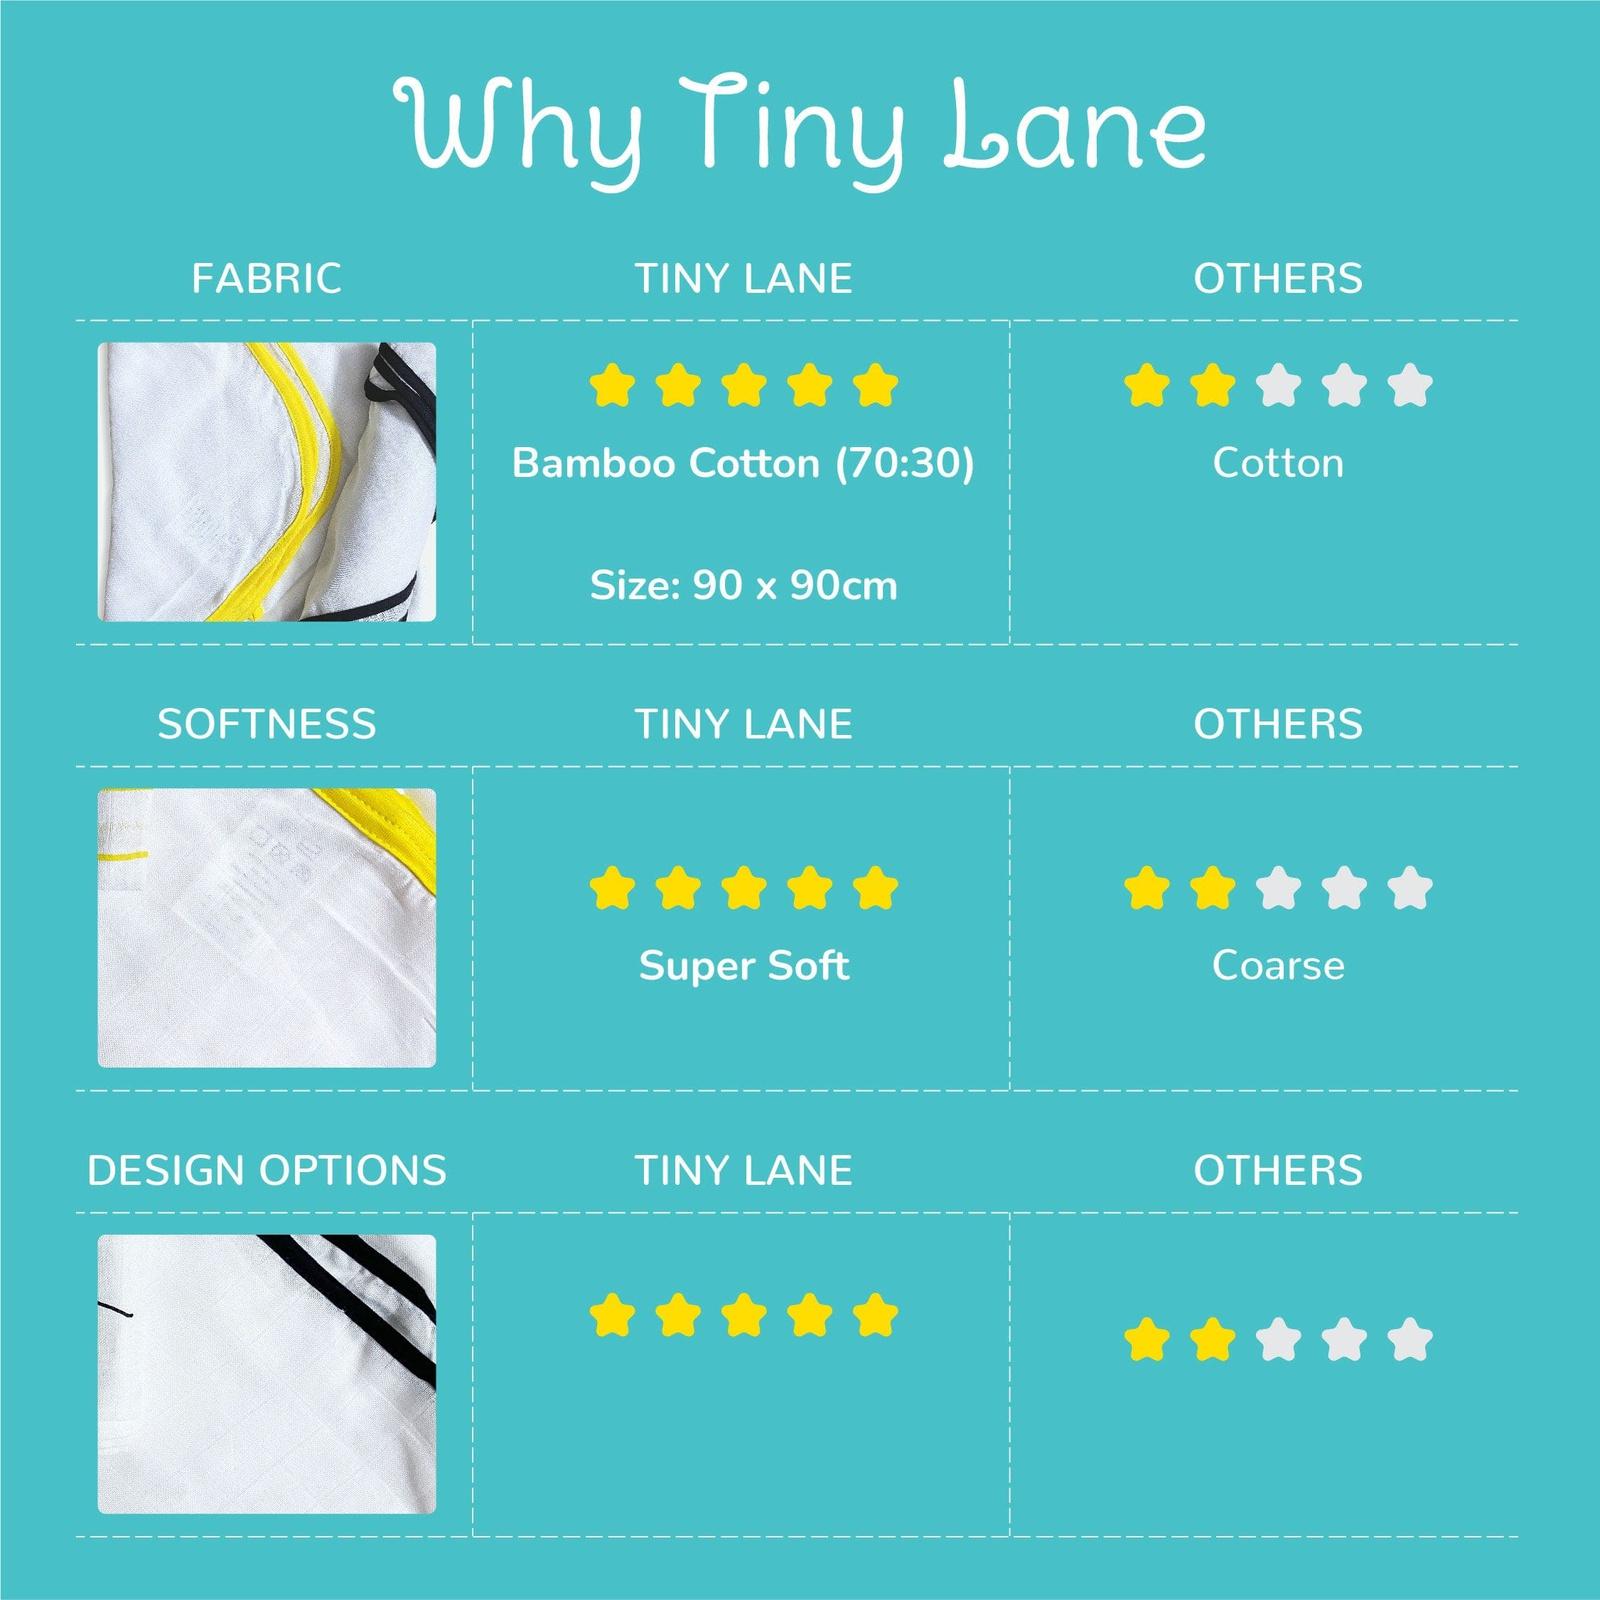 Why Tiny Lane